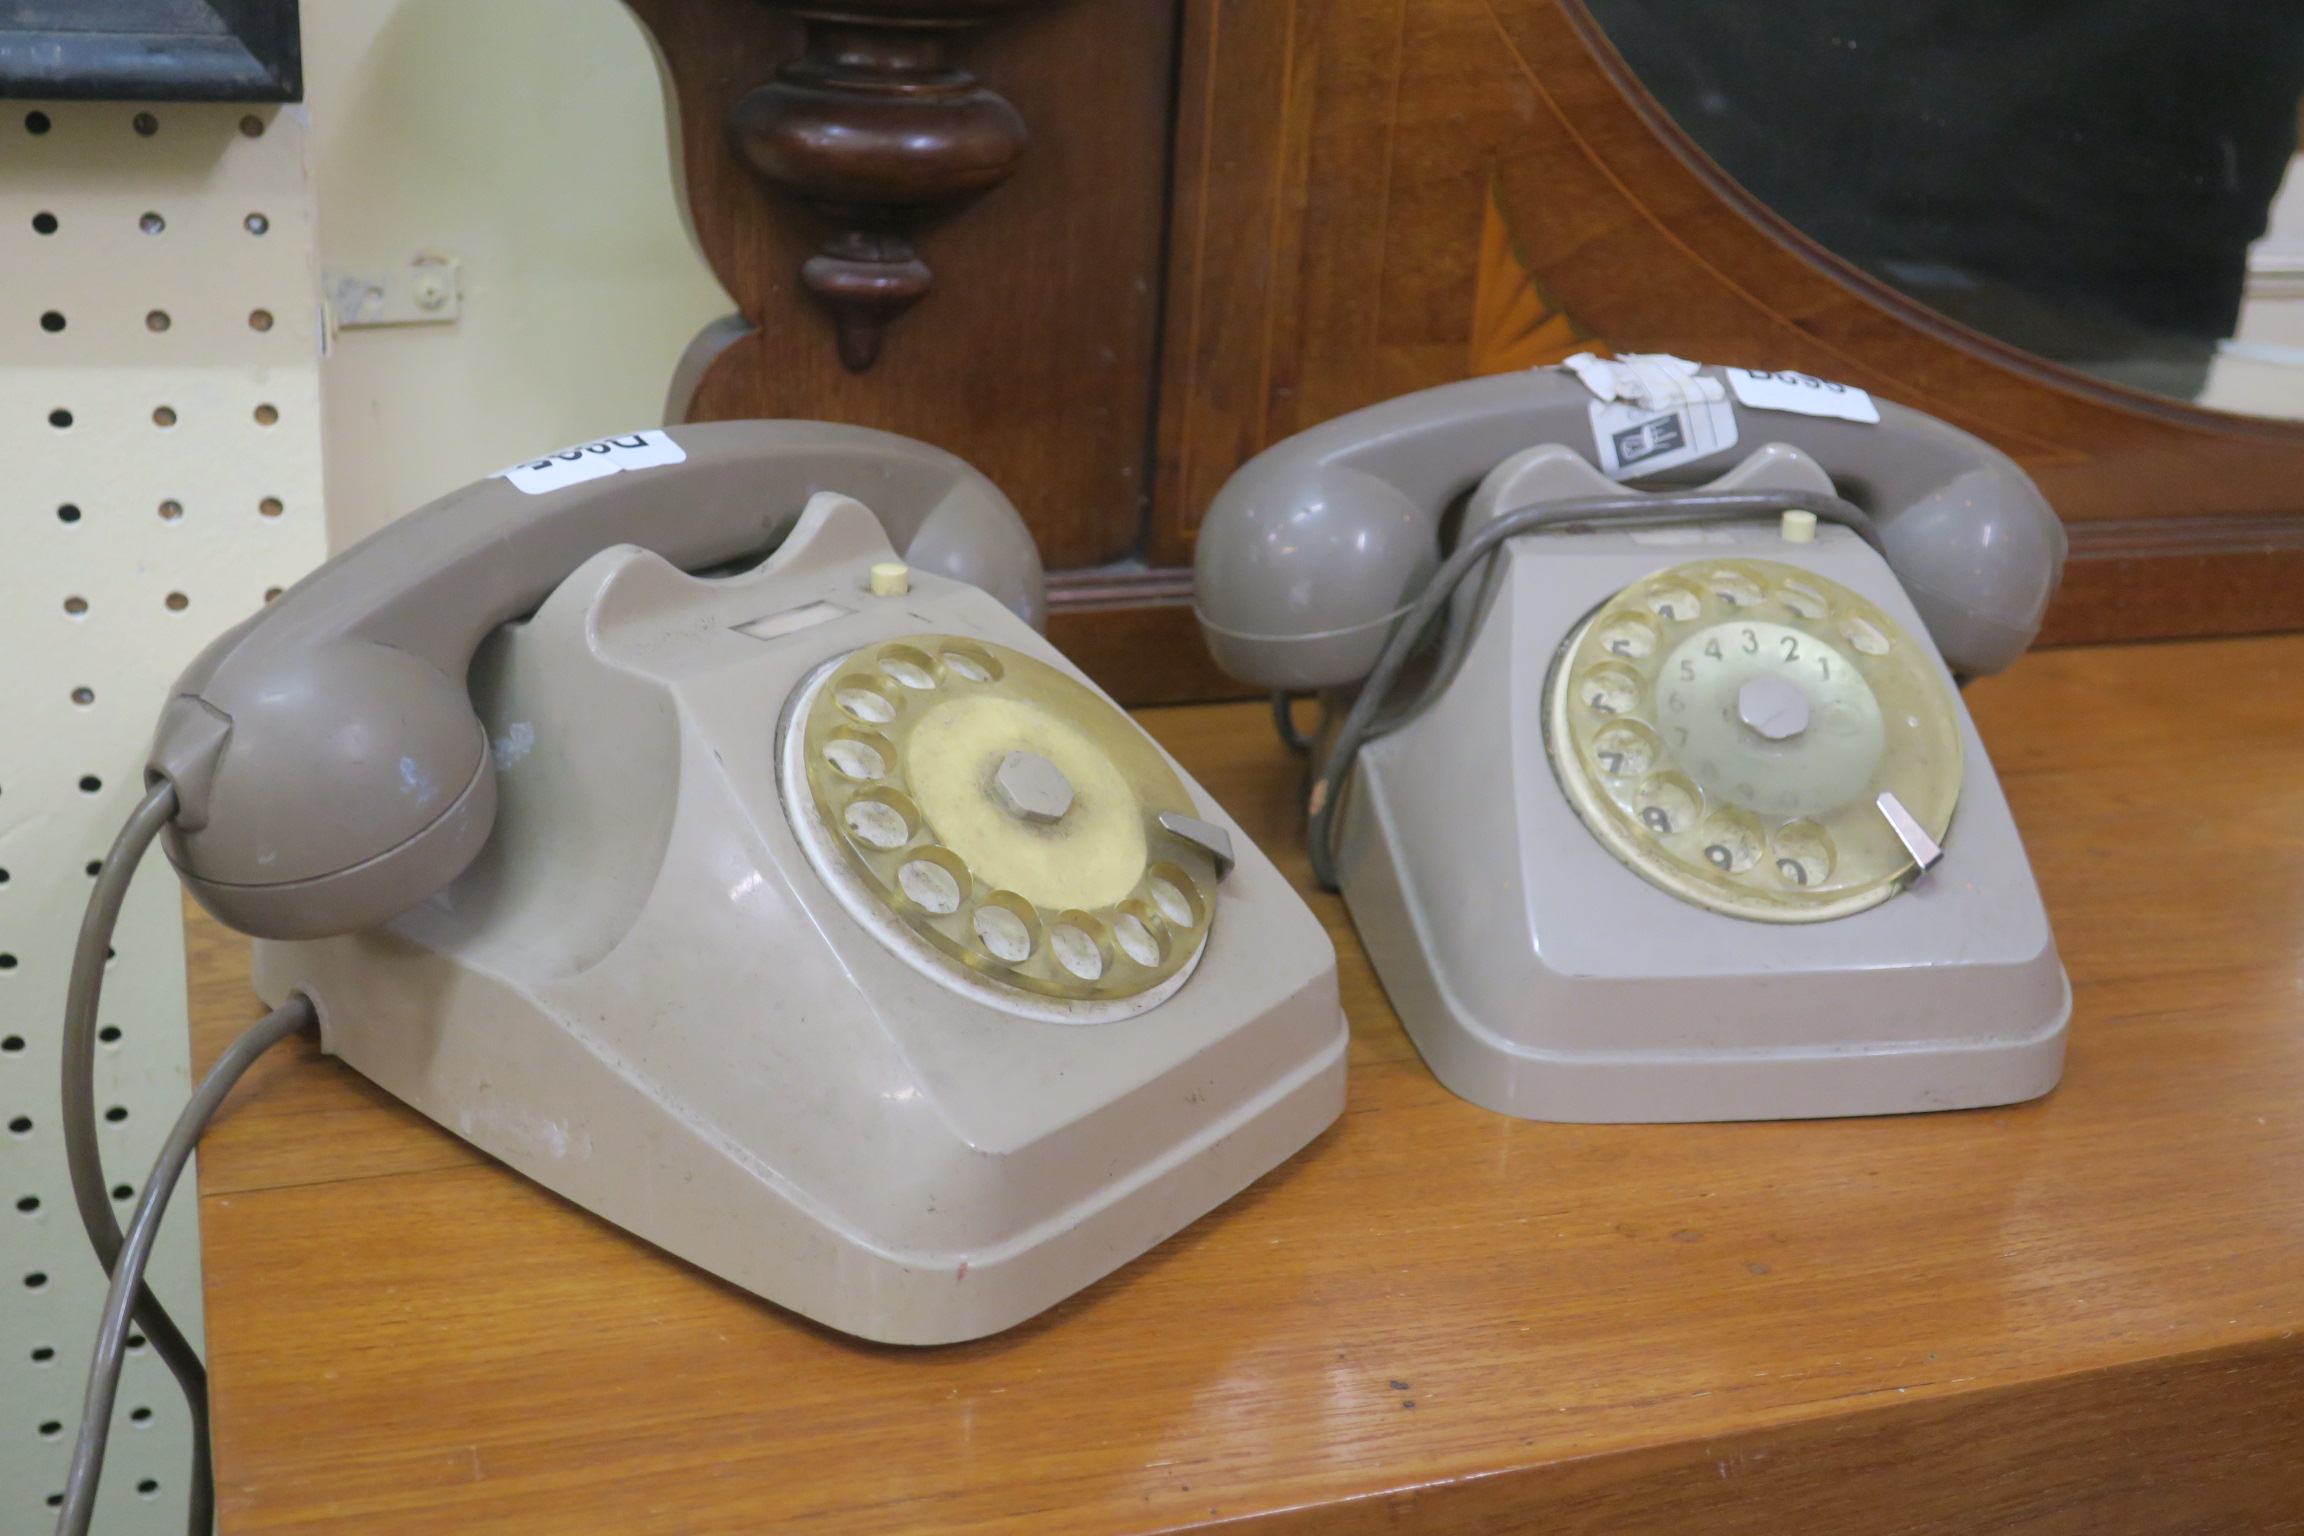 TWO GREY BAKELITE TELEPHONES